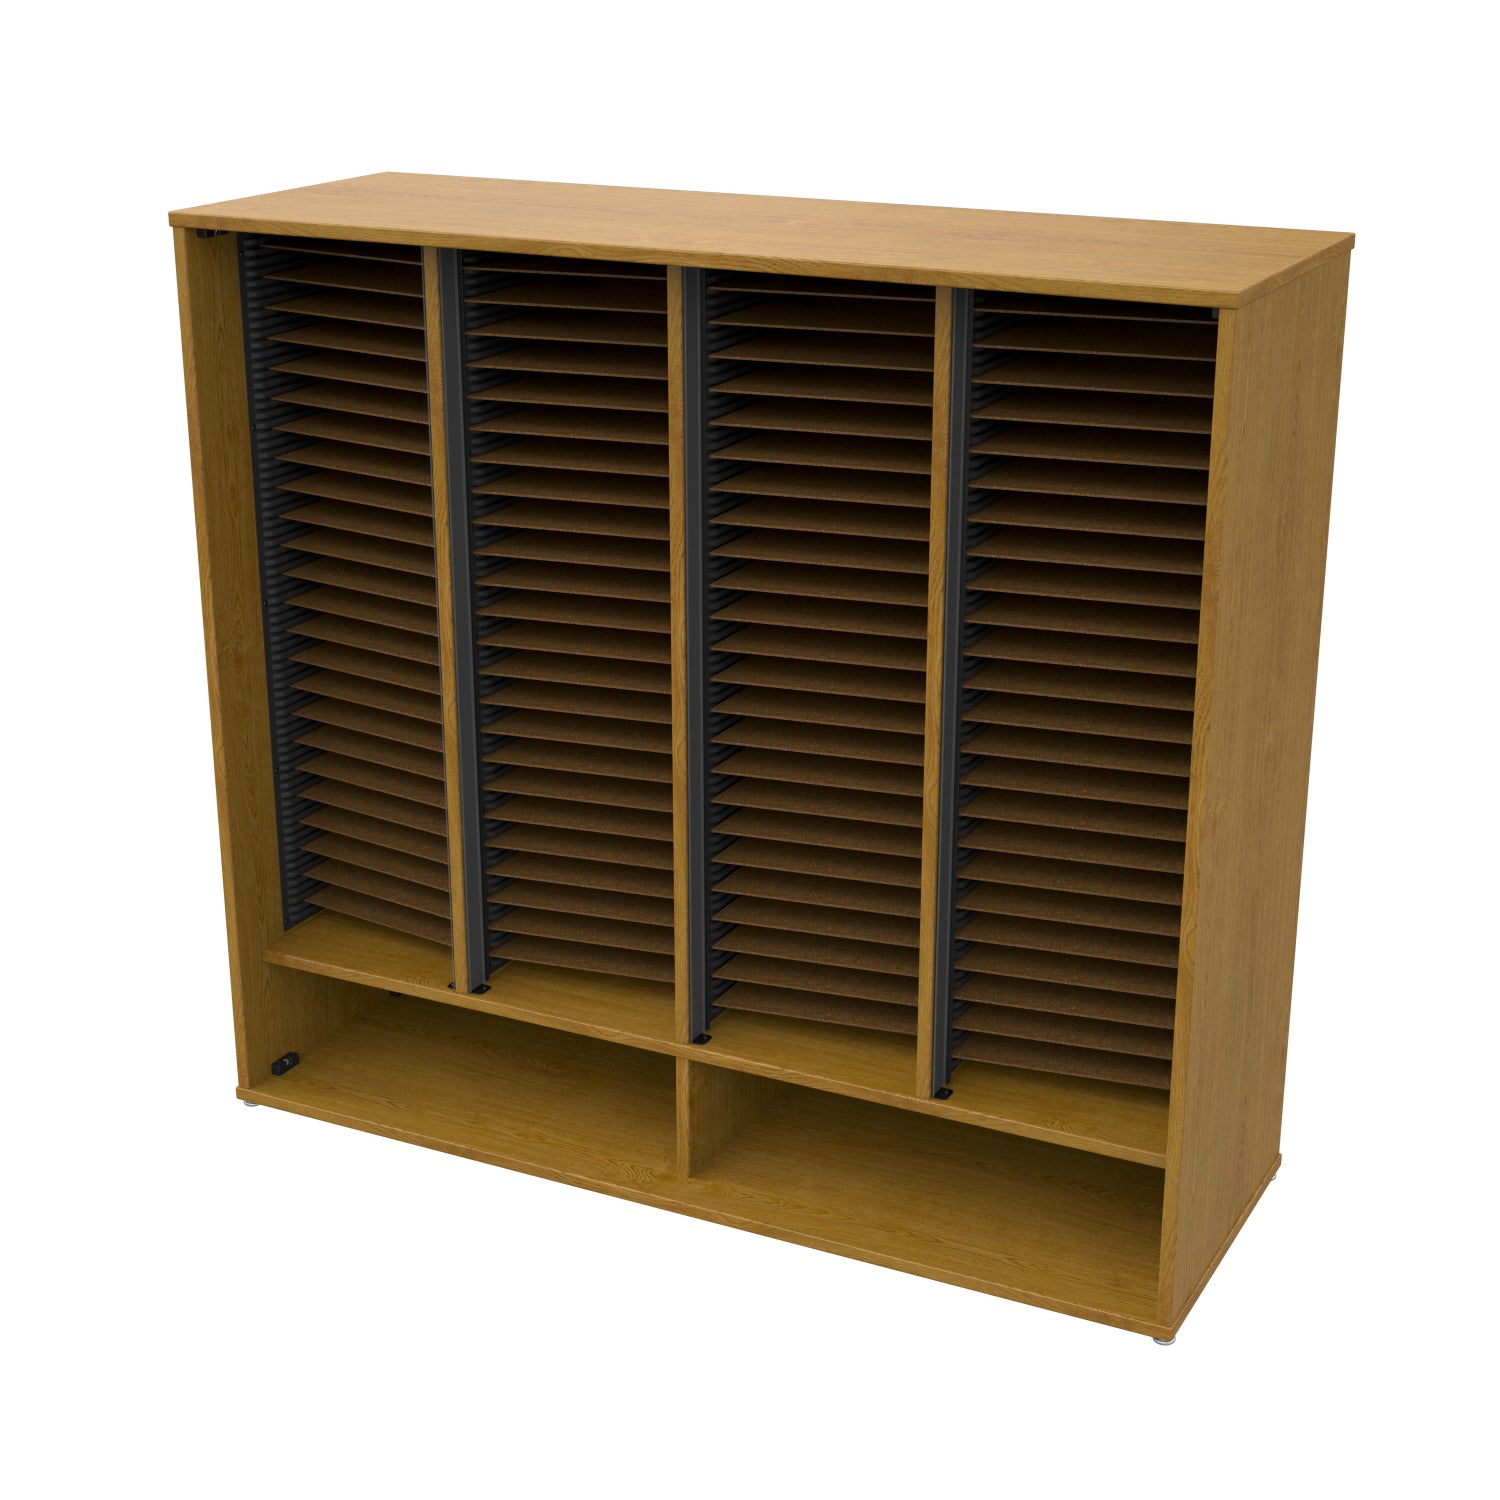 Bandstor™ 4 Compartment Choral Folio Cabinet, 102 Shelves, No Door